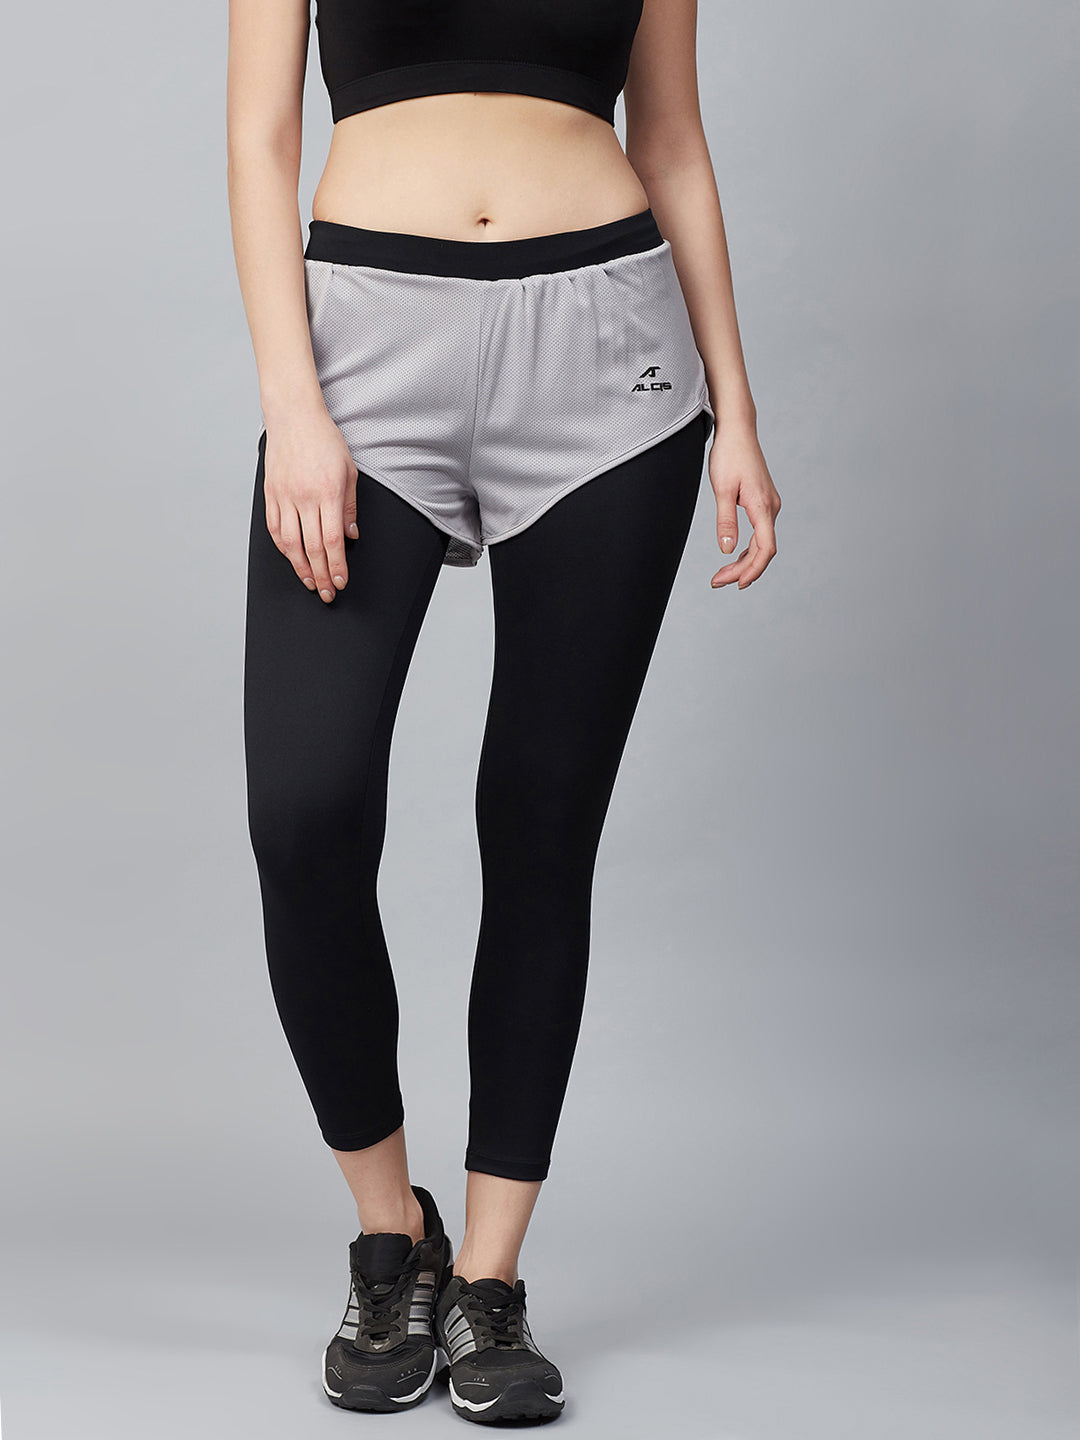 Alcis Women Black & Grey Colourblocked Cropped Running Tights